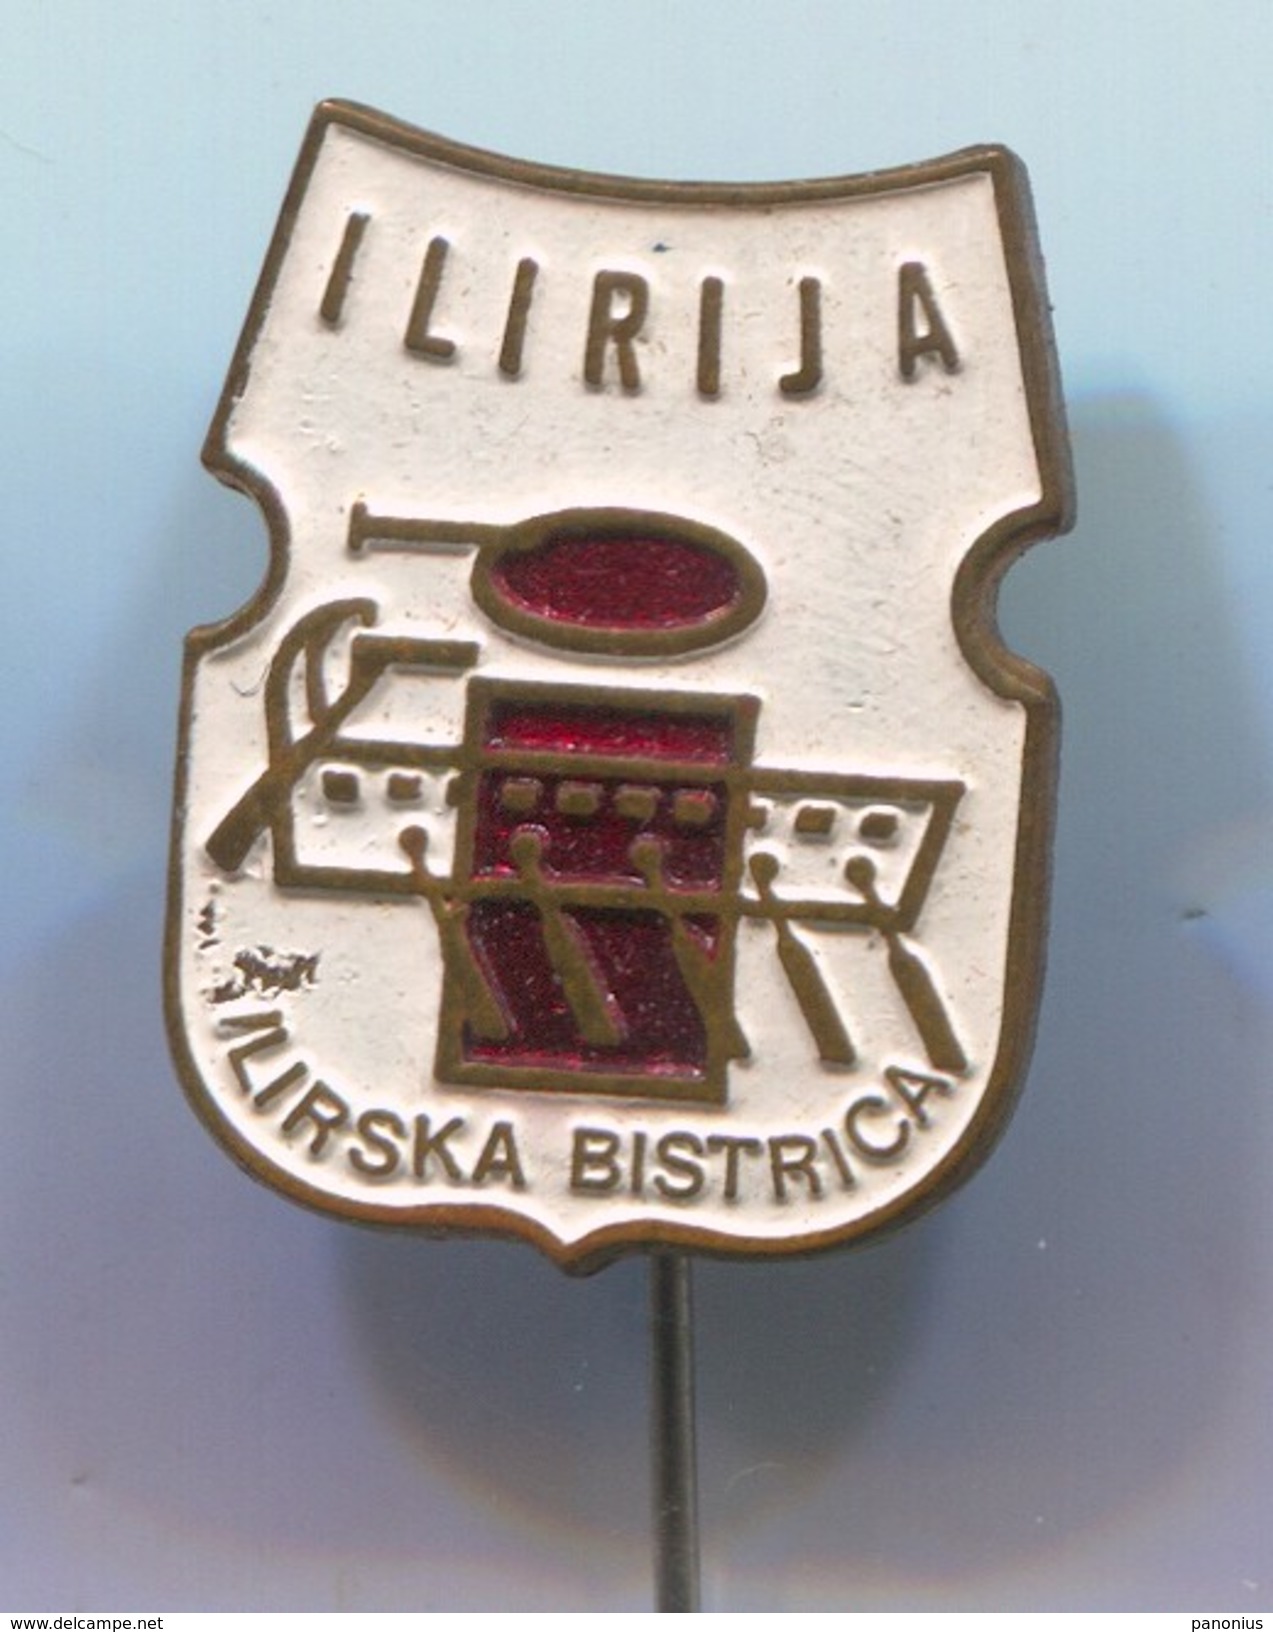 Rowing, Rudern, Canu, Kayak - Club ILIRIJA, Ilirska Bistrica Slovenia, Vintage Pin, Badge, Abzeichen - Rudersport